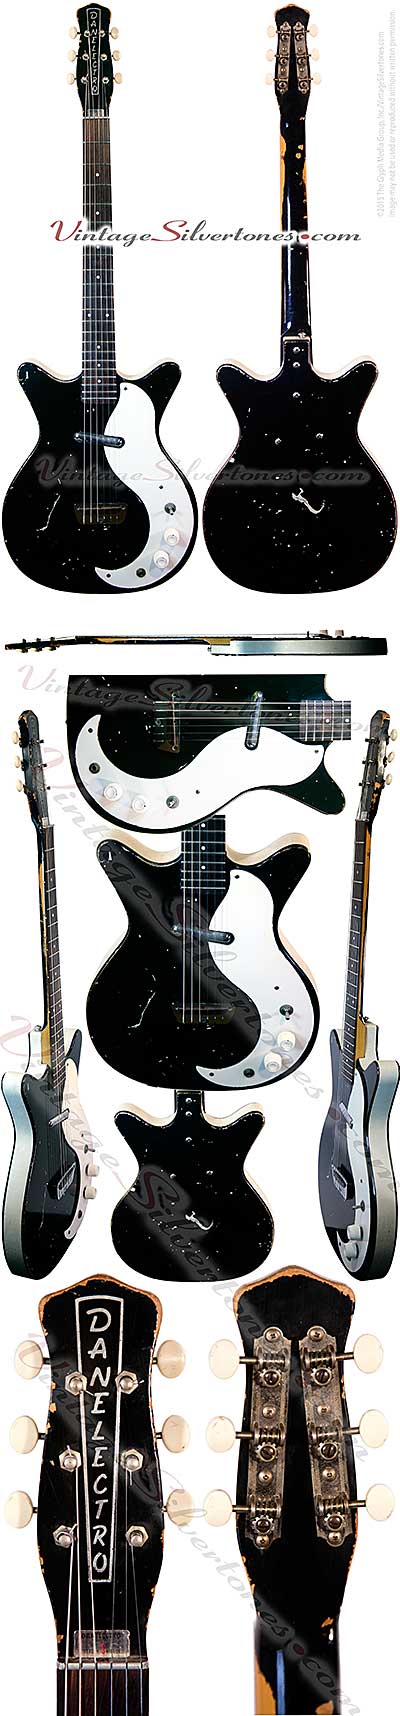 Danelectro 3011, 1 pickup electric guitar semi-solid body black finsh white pickguard, binding, made in Neptune, NJ 1960